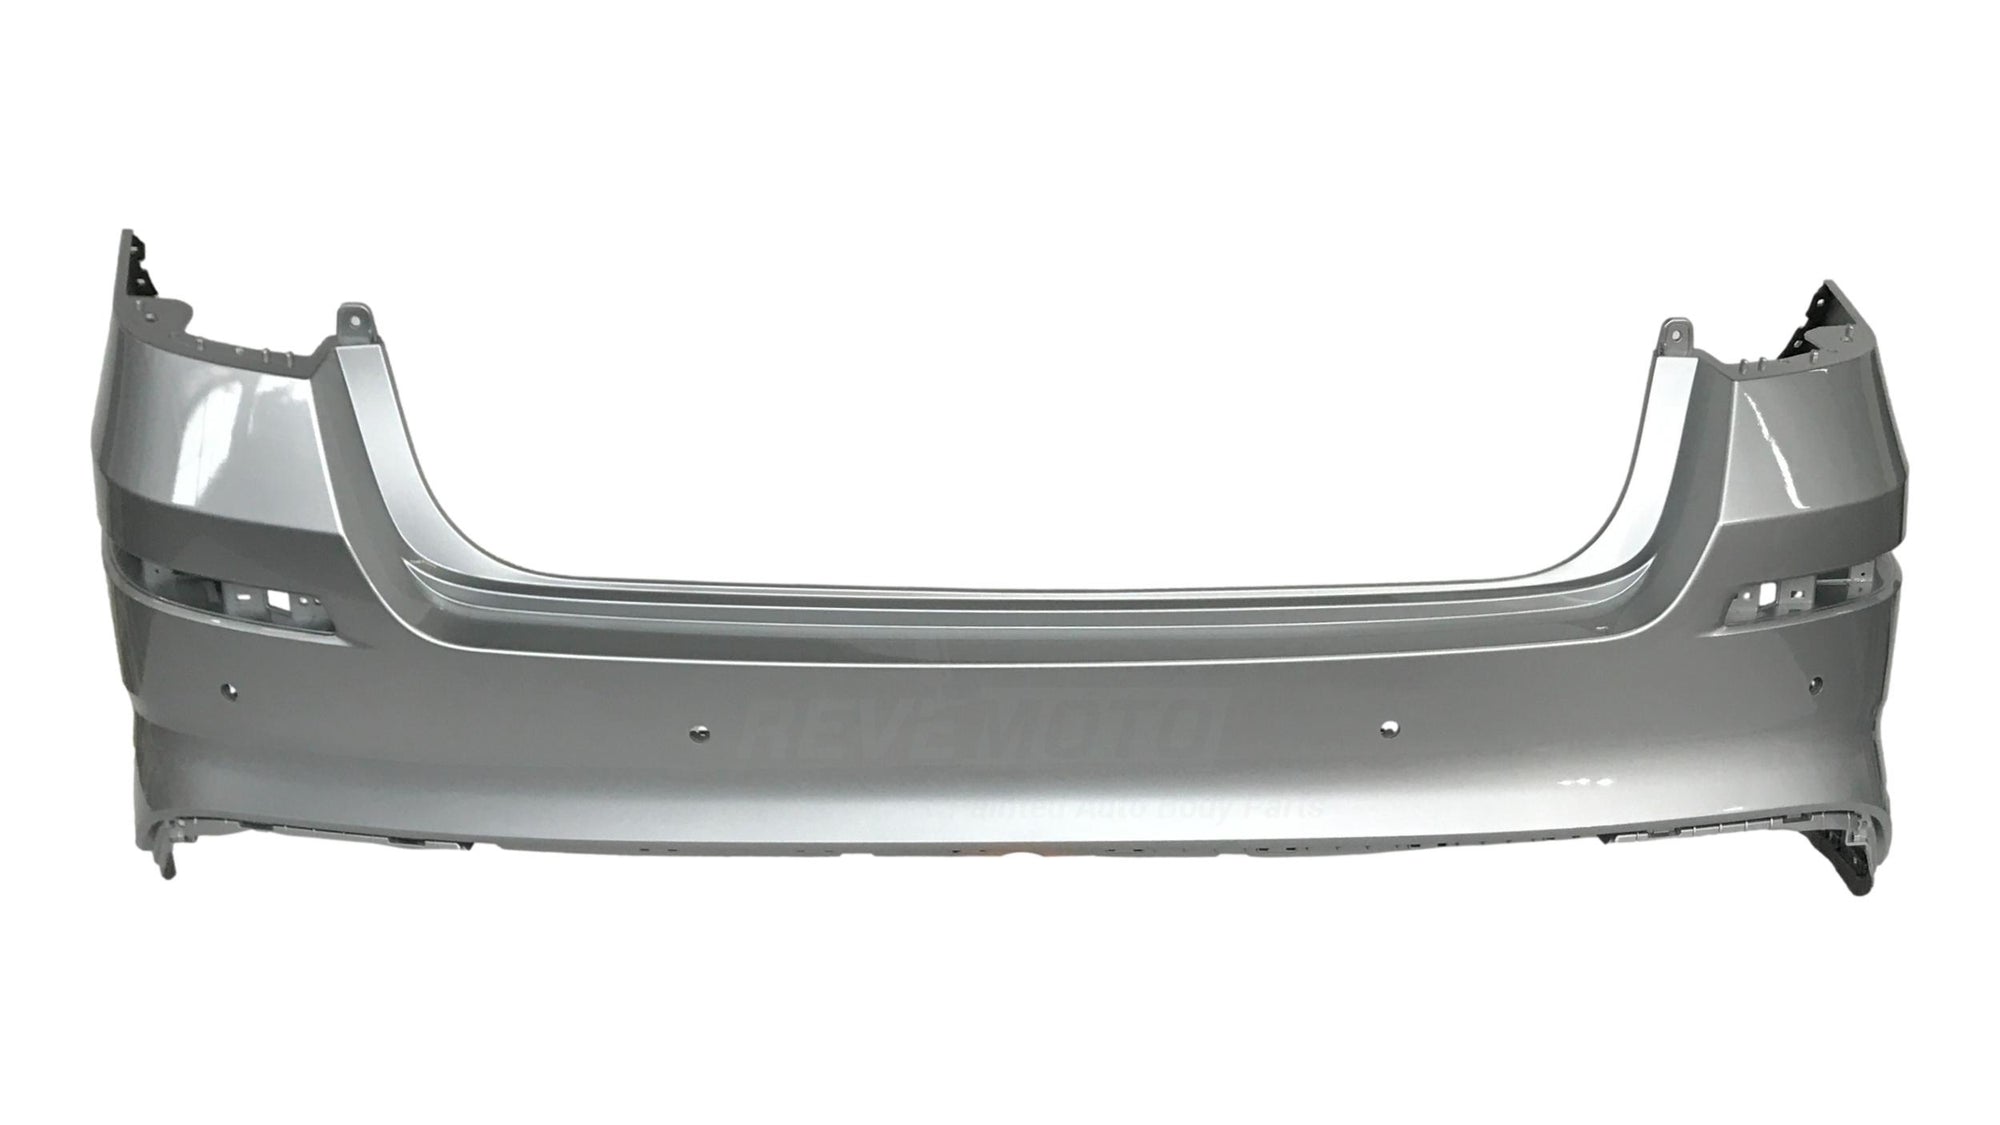 19727 - 2019-2020 Kia Optima Rear Bumper Painted Sparkling Silver Metallic (KCS/KTZ) 86610D5510 KI1100222